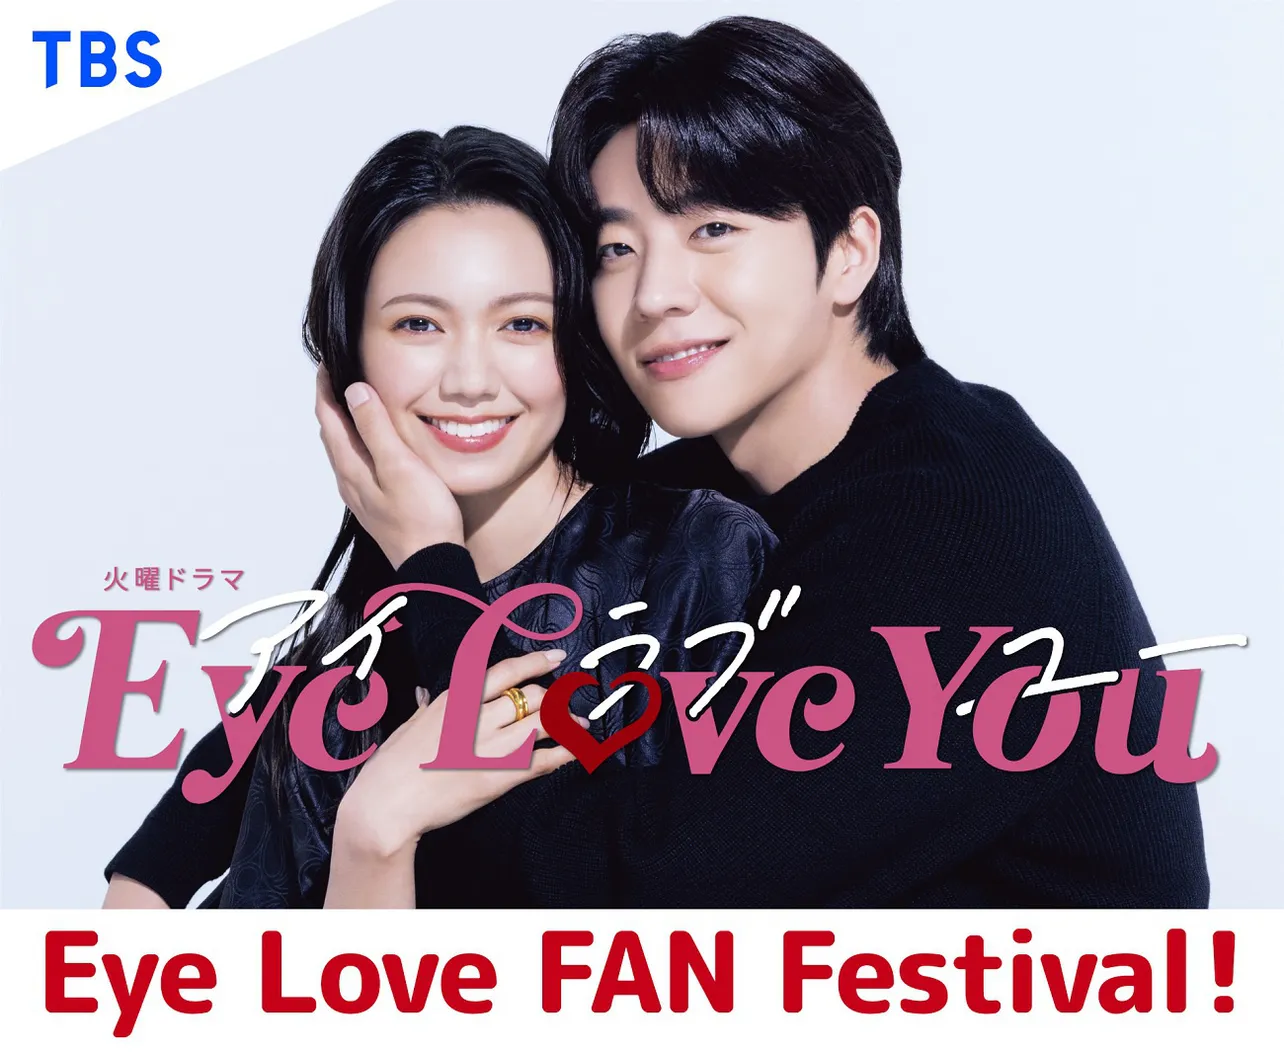 「Eye Love You」の出演者たちに会えるファンイベントの開催が決定！